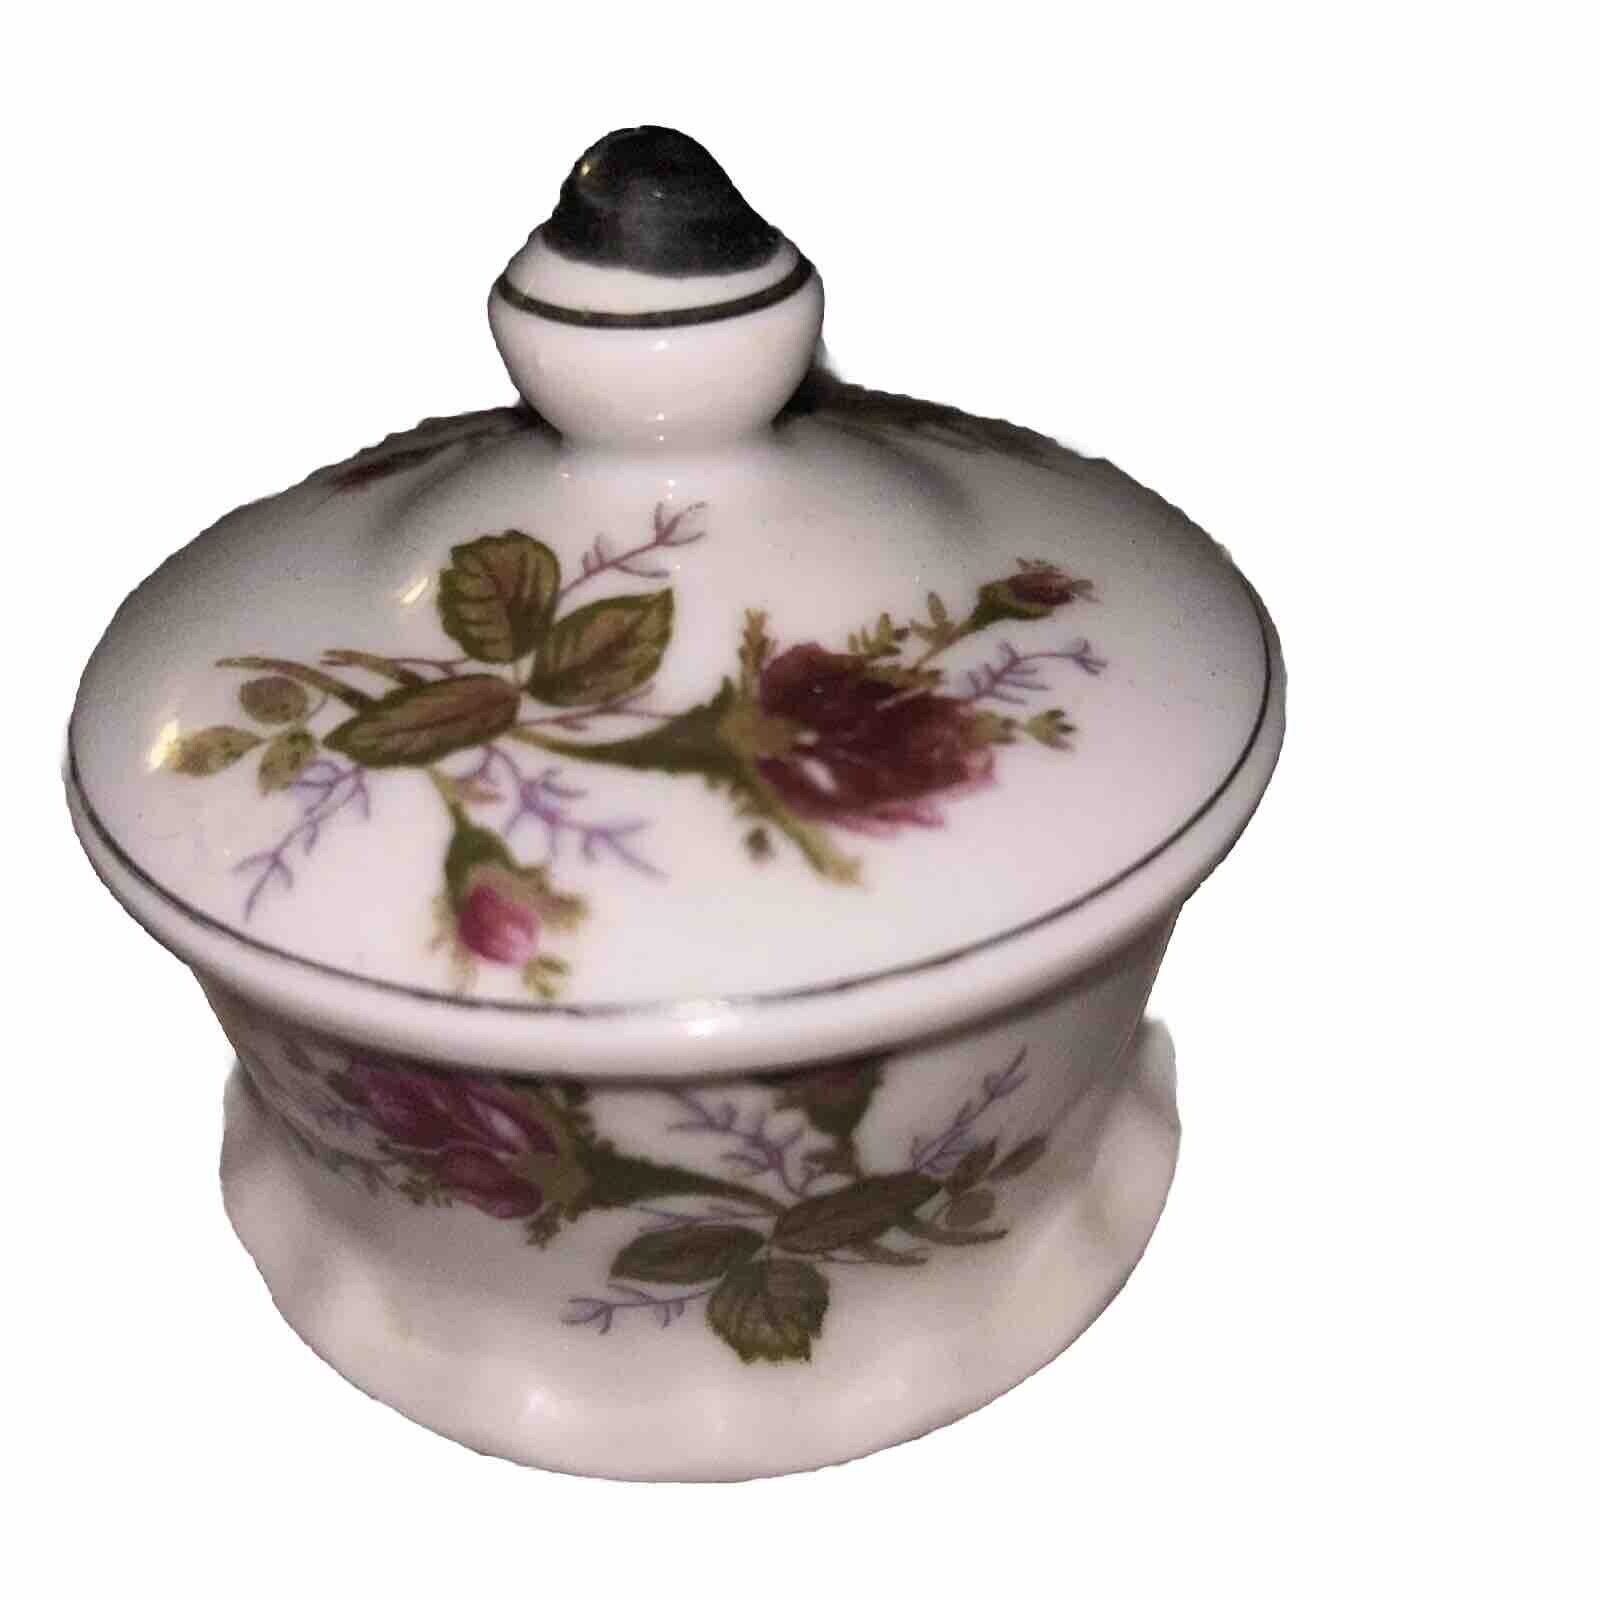 Small, Vintage, Porcelain, Rose Design, with Silver Trim, Trinket Box